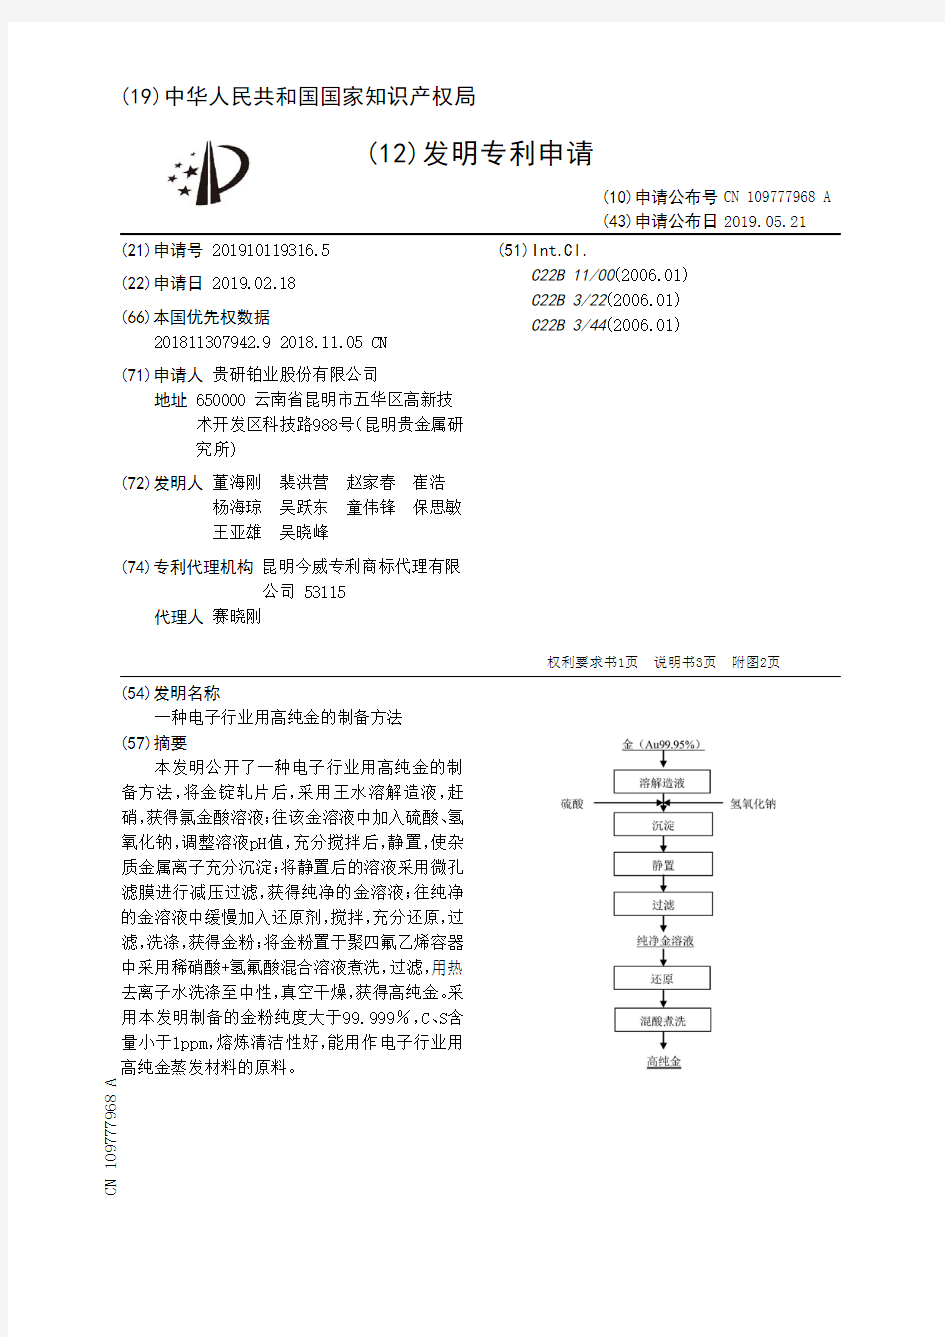 【CN109777968A】一种电子行业用高纯金的制备方法【专利】